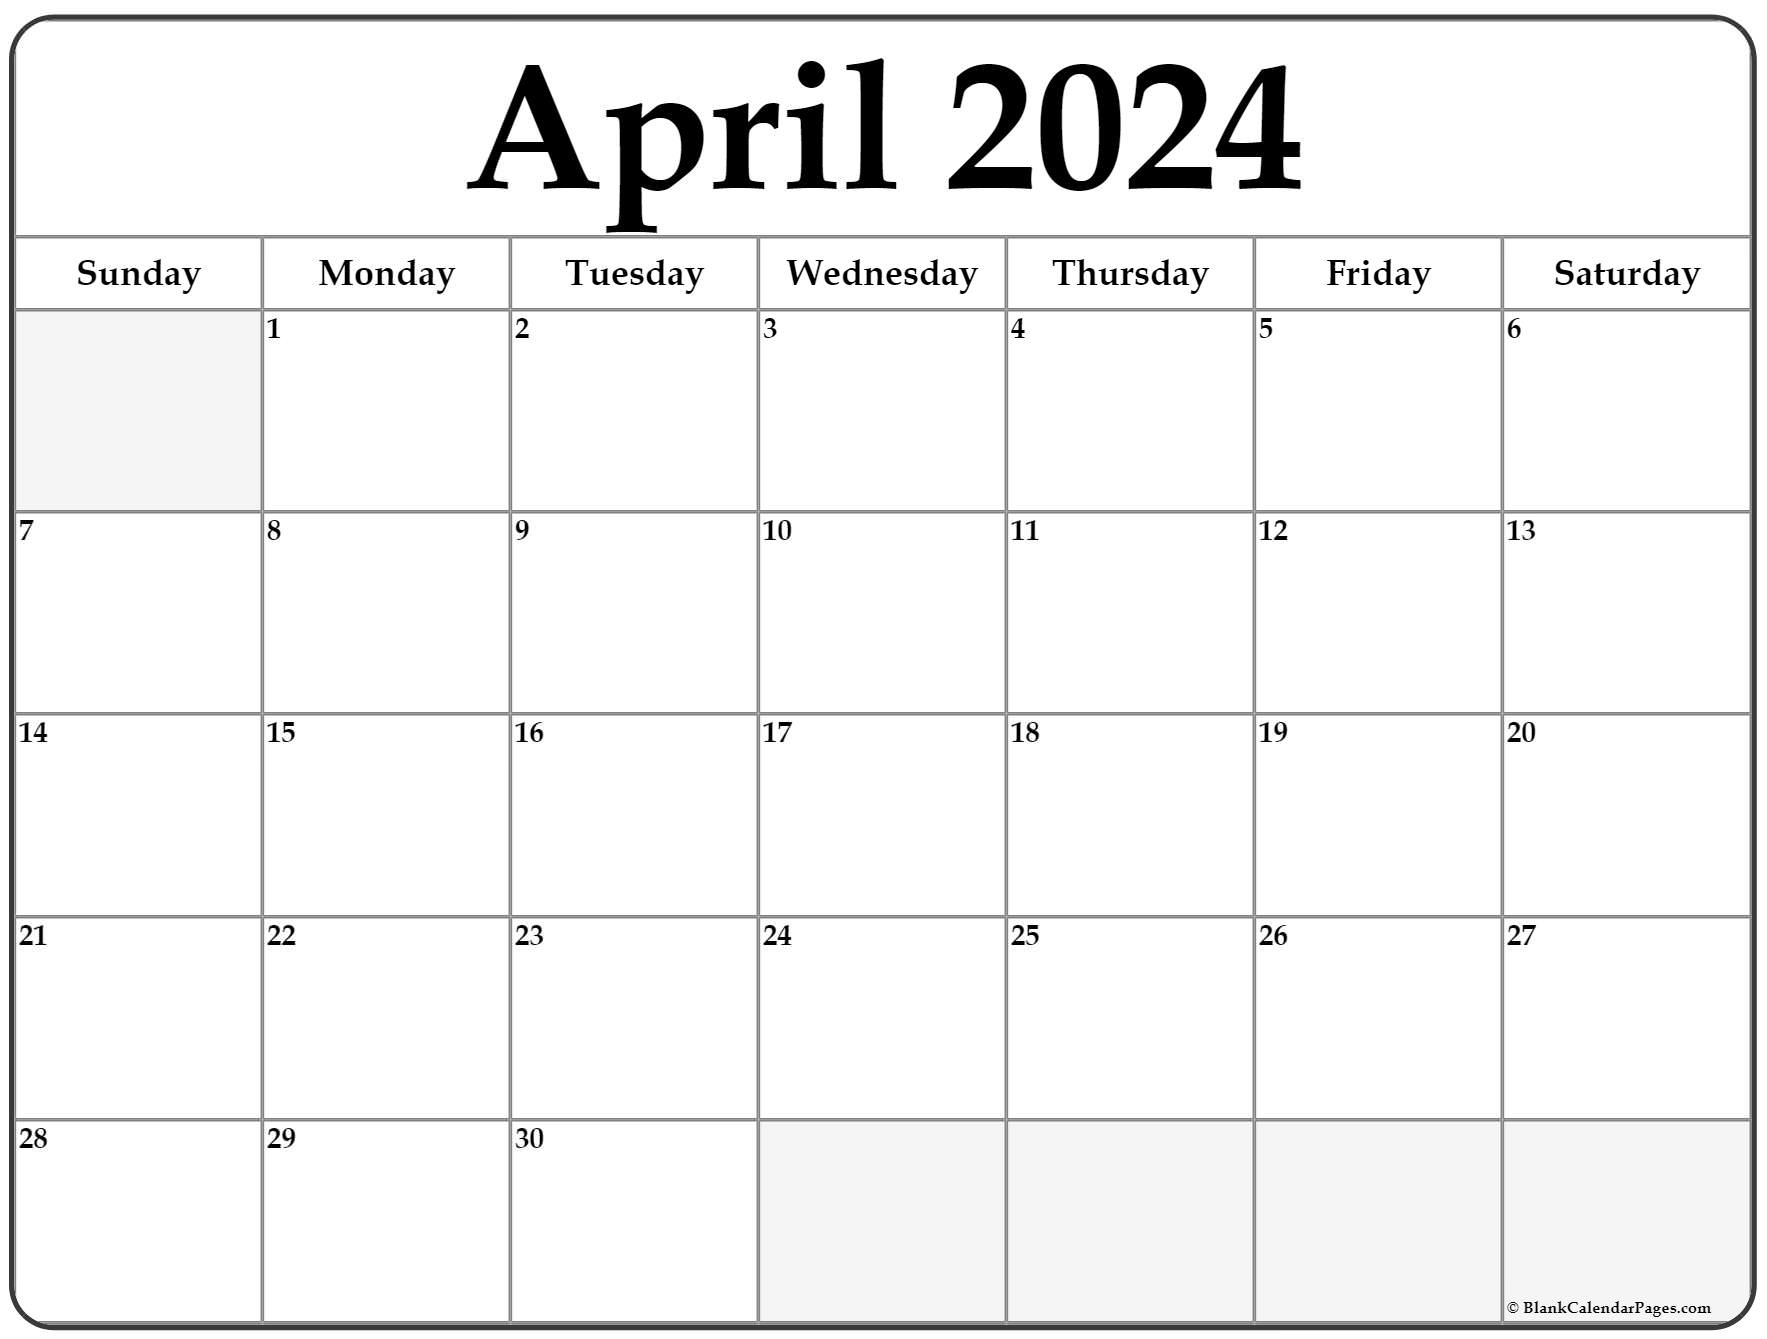 April 2024 Calendar | Free Printable Calendar within Free Printable Blank Calendar April 2024